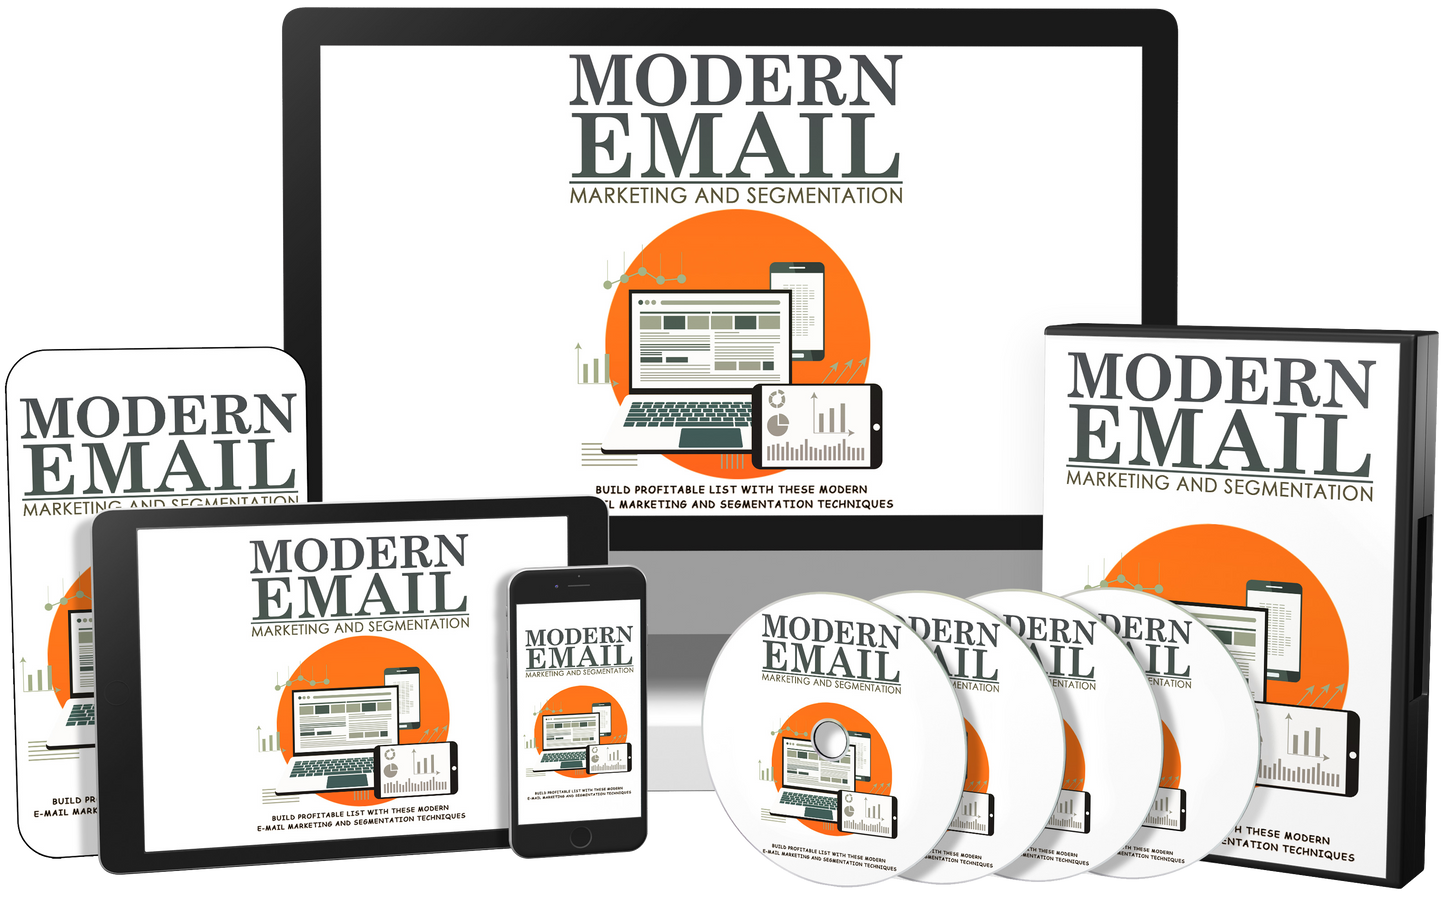 Modern Email Marketing and Segmentation